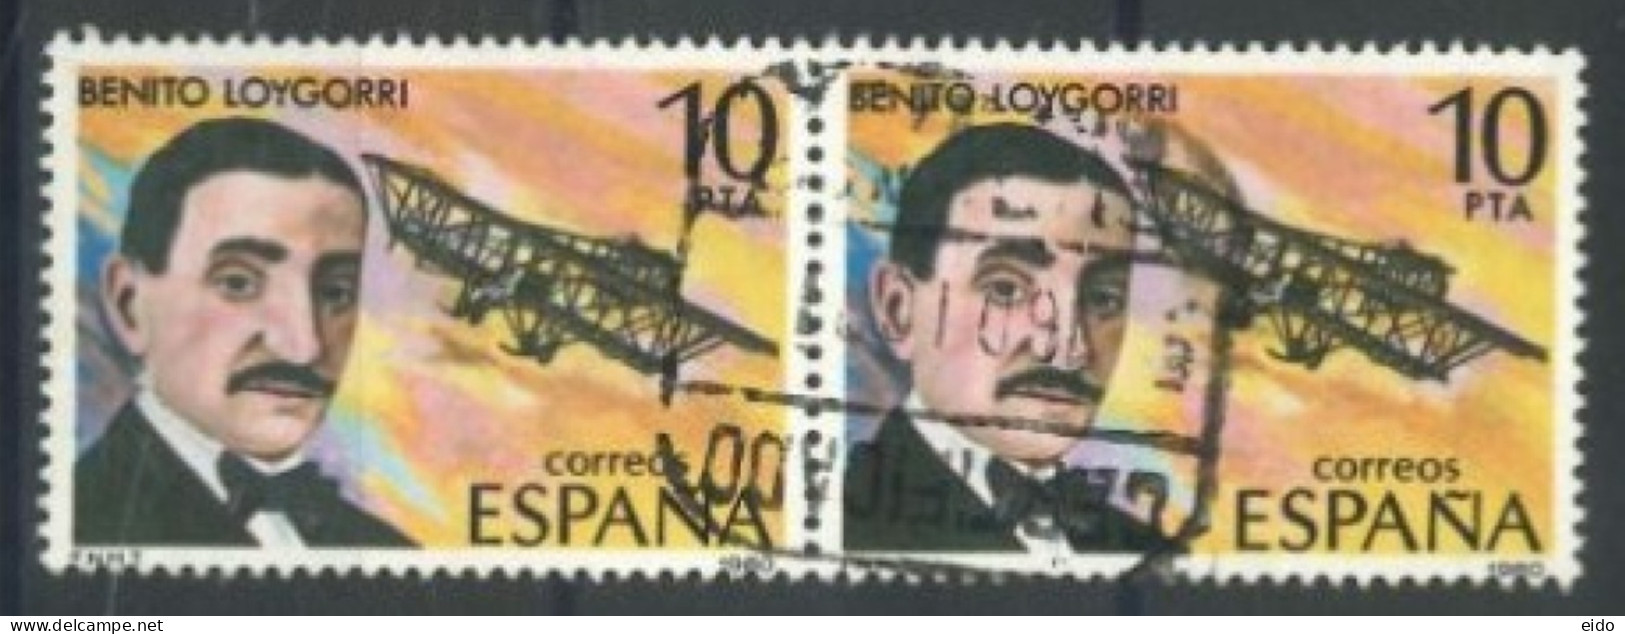 SPAIN, 1980, AVIATION PIONEERS PAIR OF STAMPS, # 2228, USED. - Used Stamps